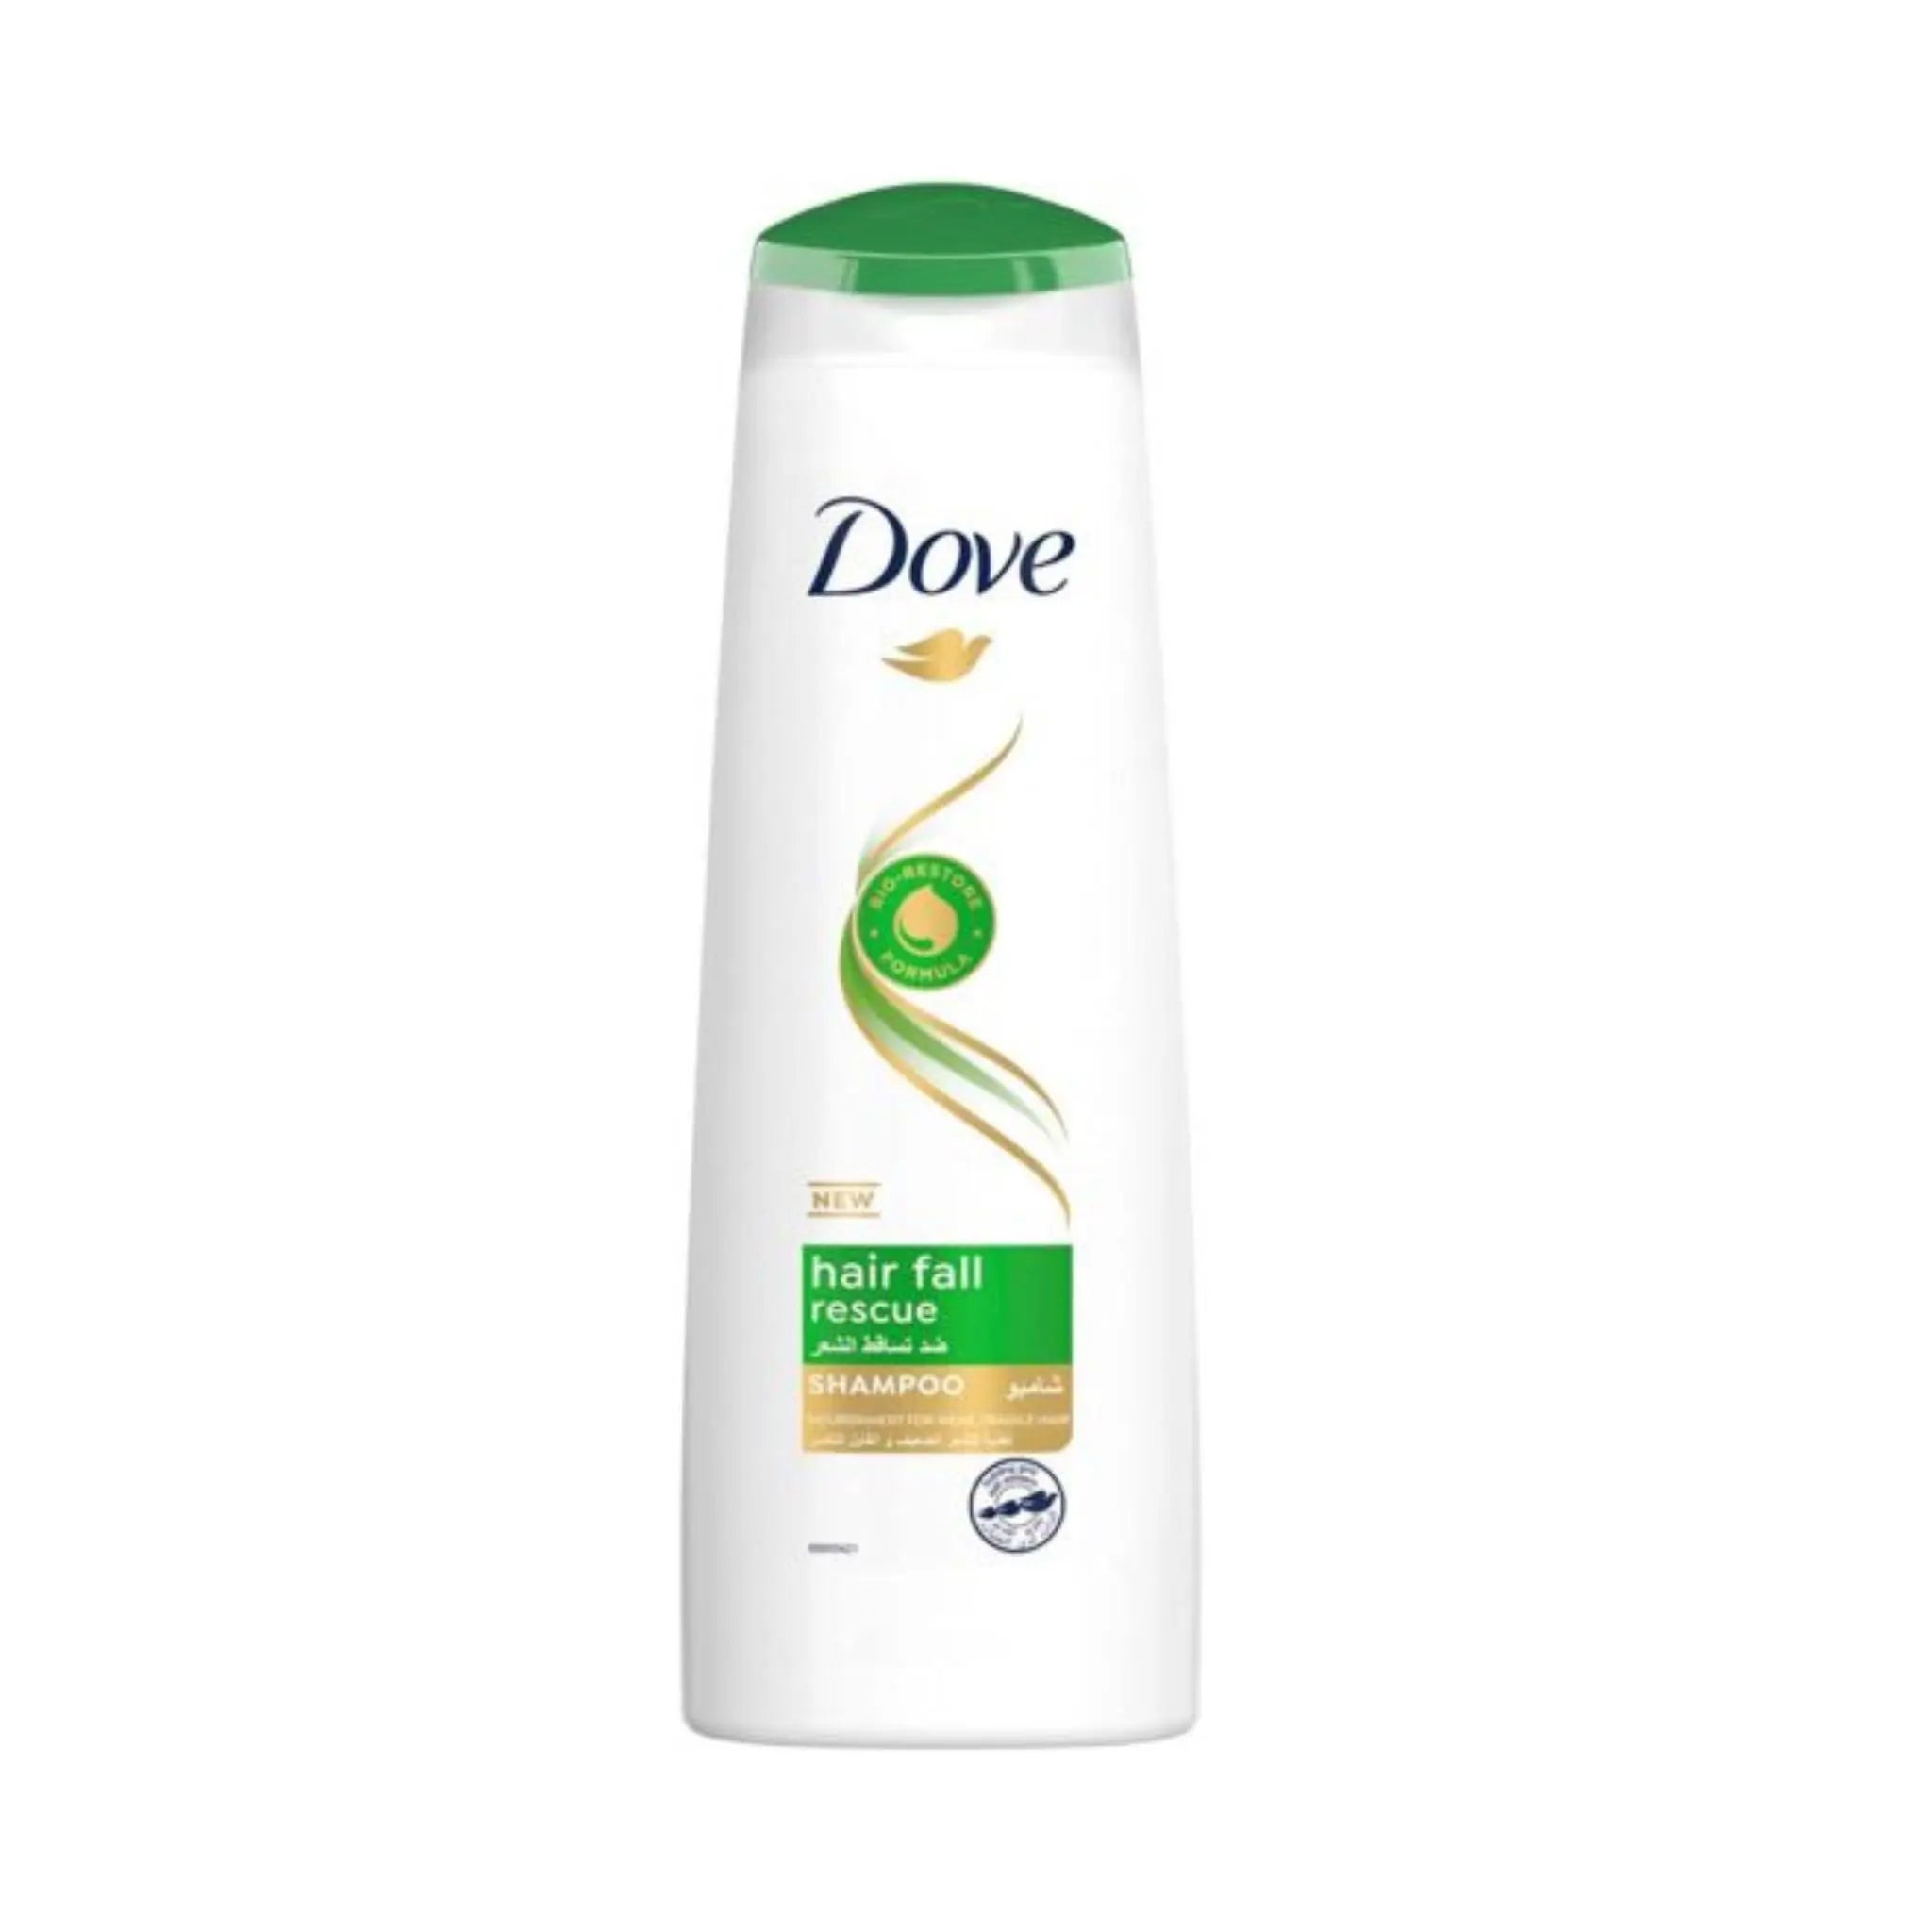 Dove Hair Fall Rescue Shampoo 400ML - 2x6 sets (1 carton) Marino.AE